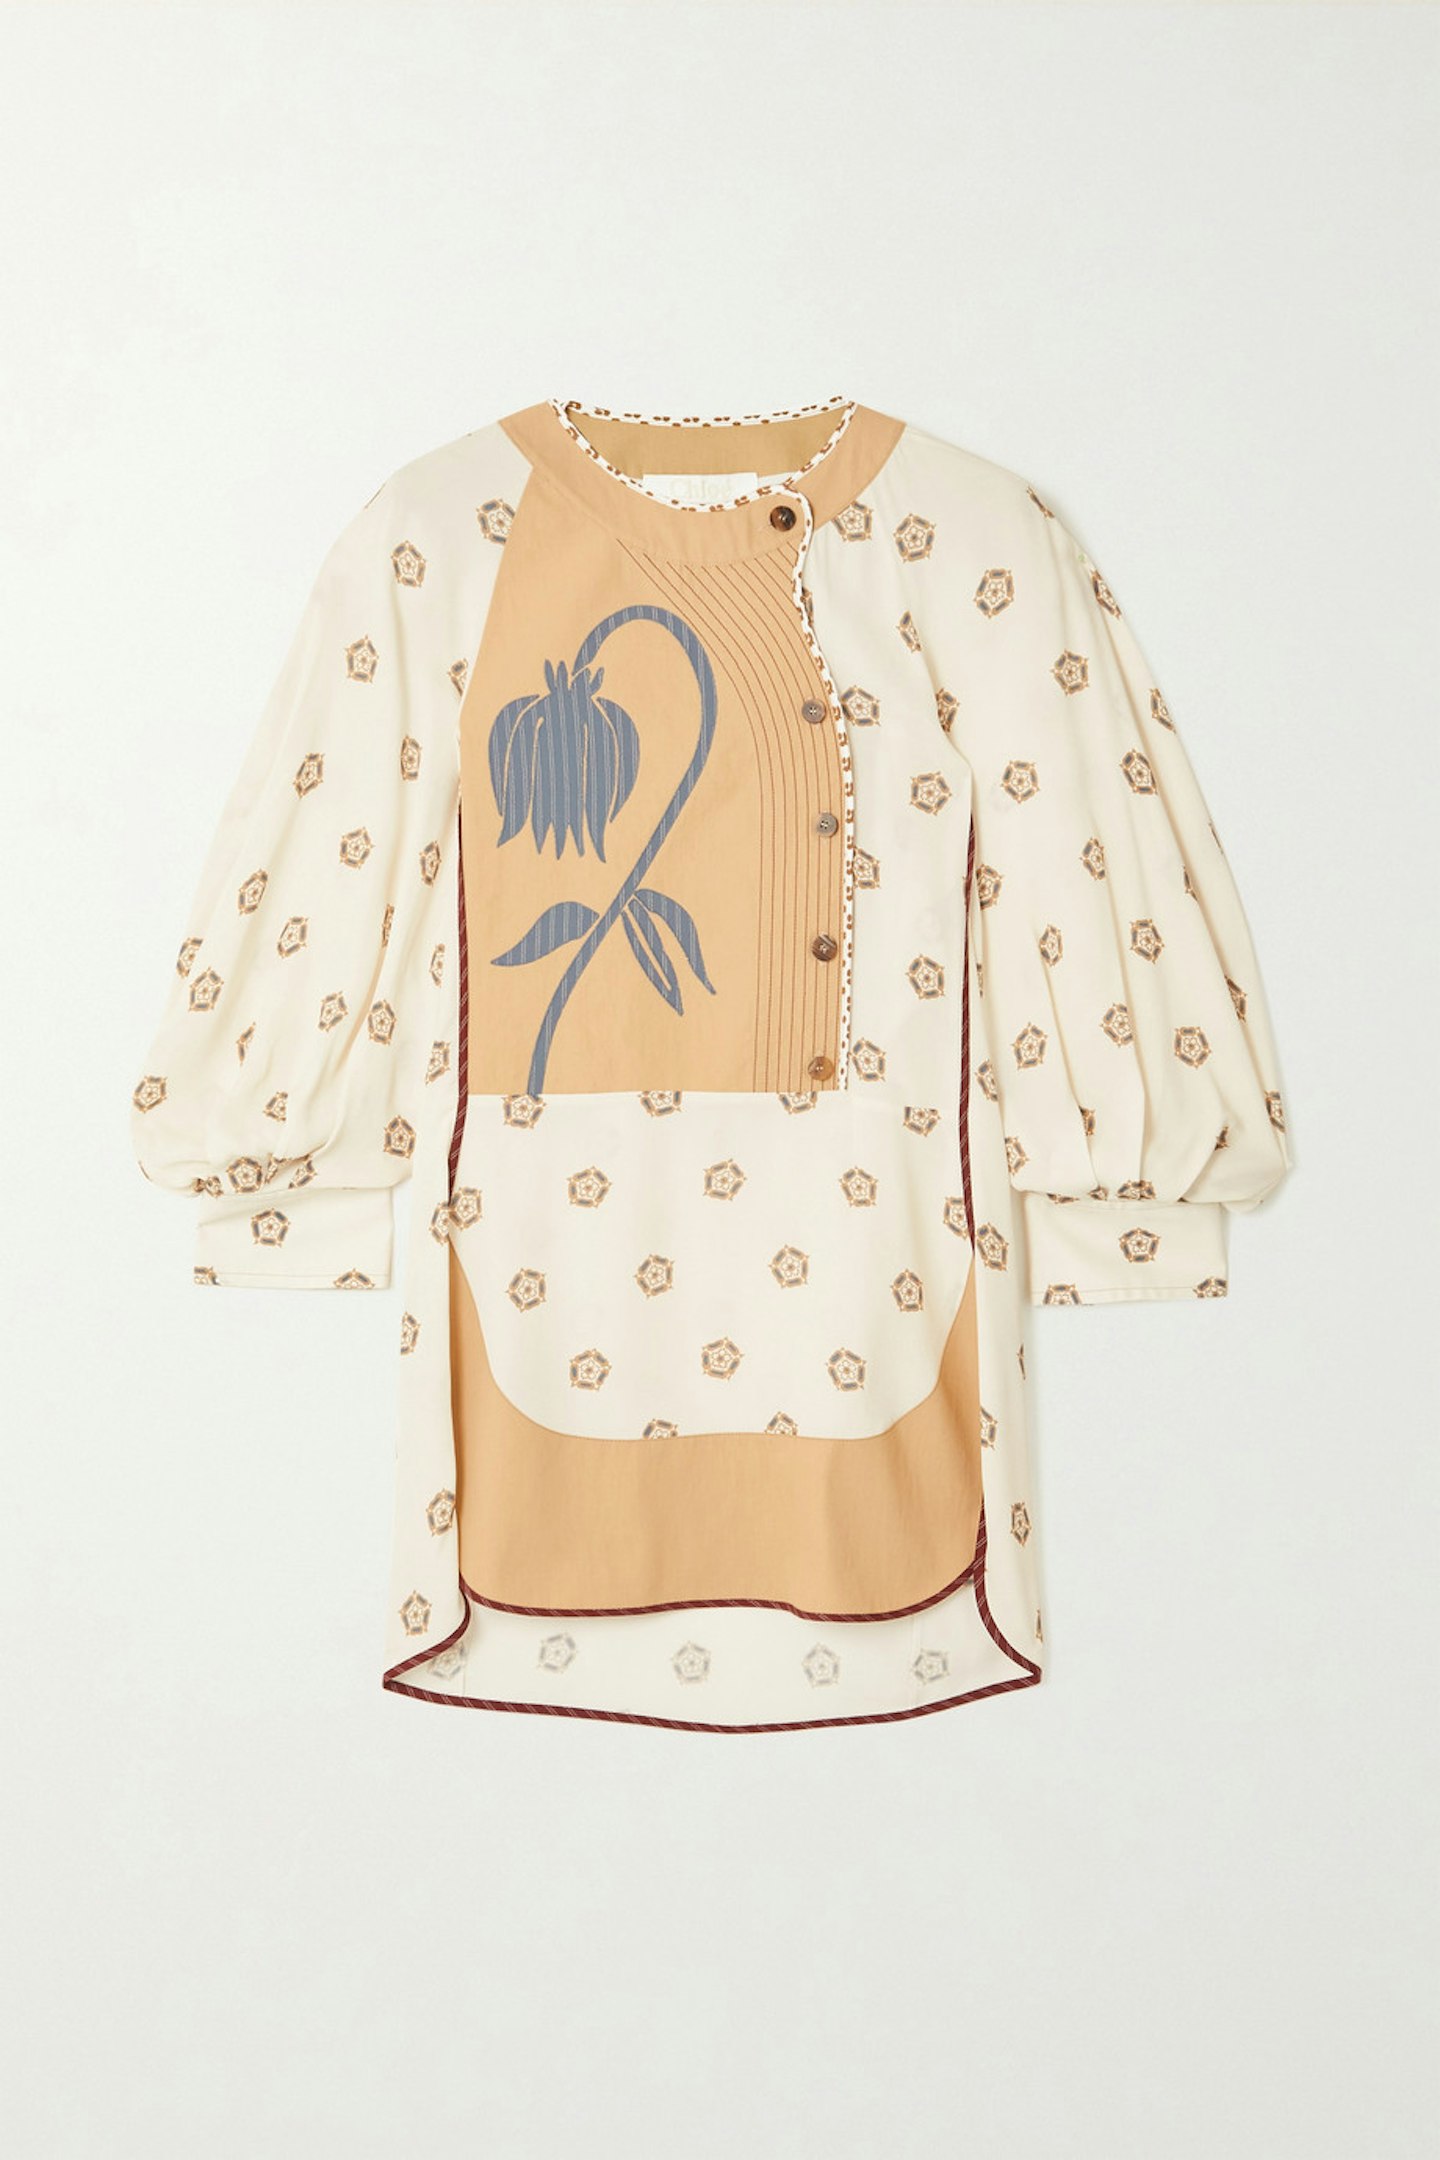 Chloe, Appliquu00e9d paneled poplin and printed crepe de chine blouse, £1,320